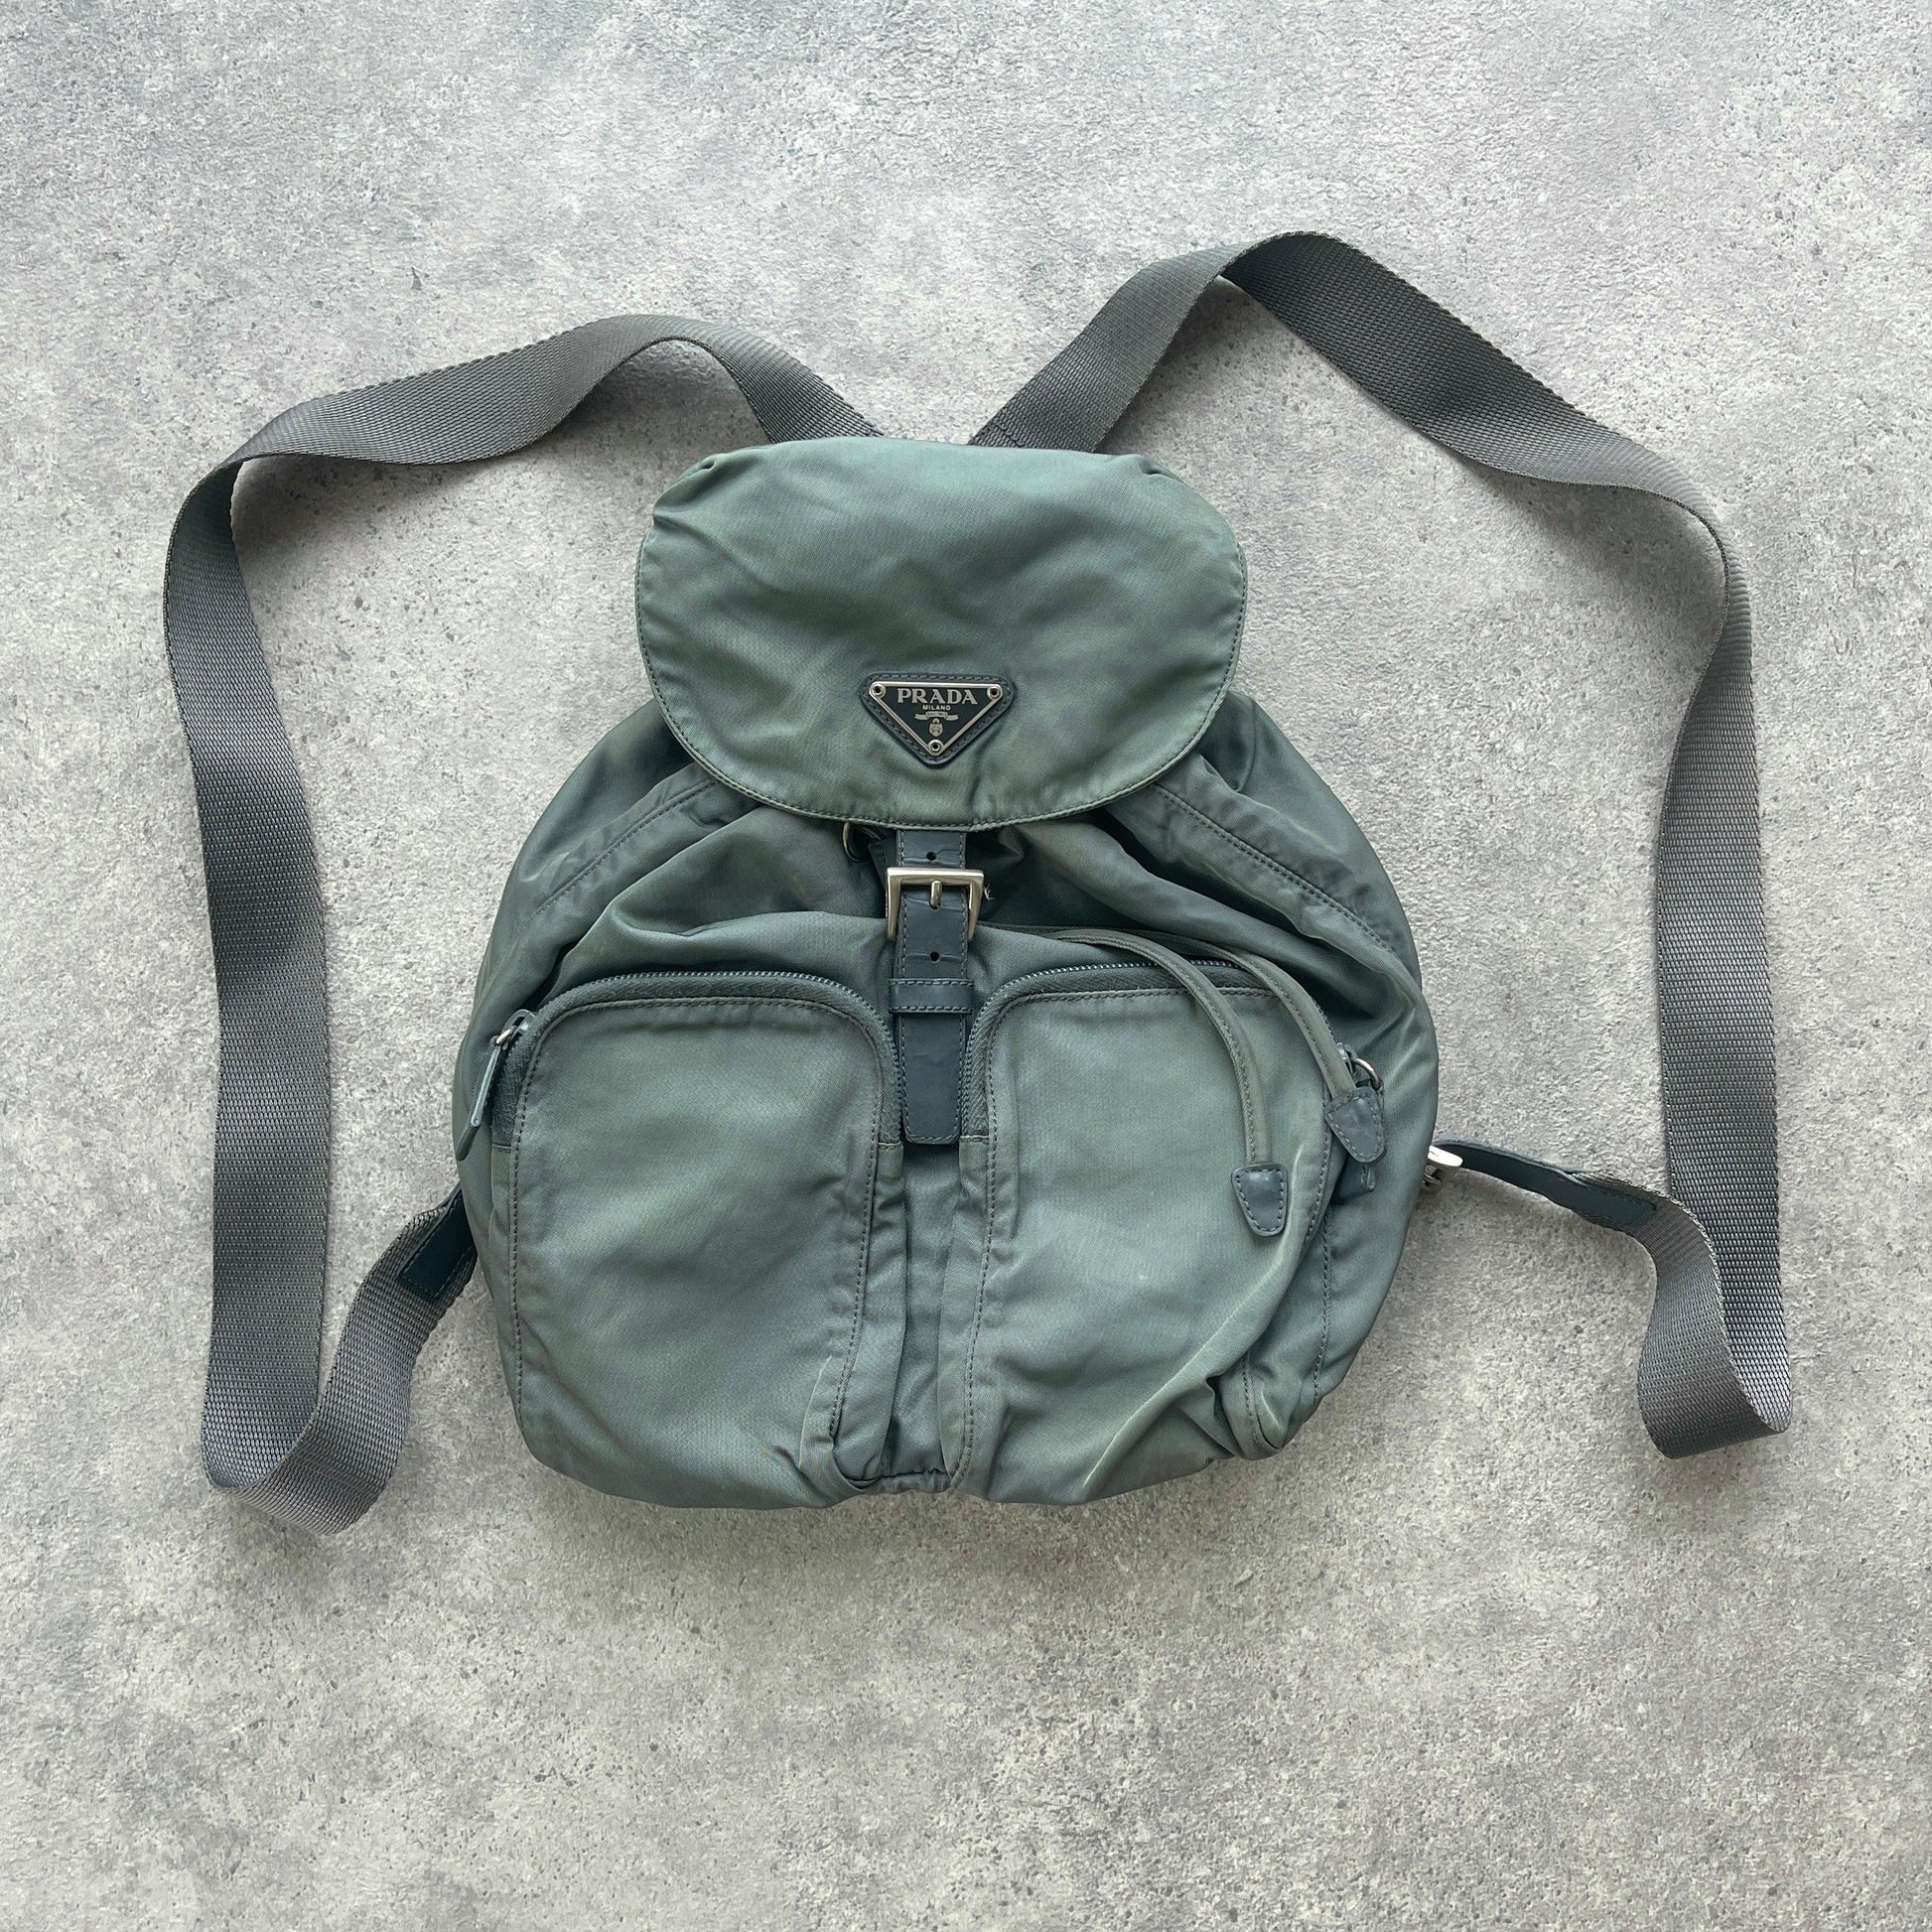 Prada Milano 2000s nylon mini backpack (12”x11”x5”) - Known Source